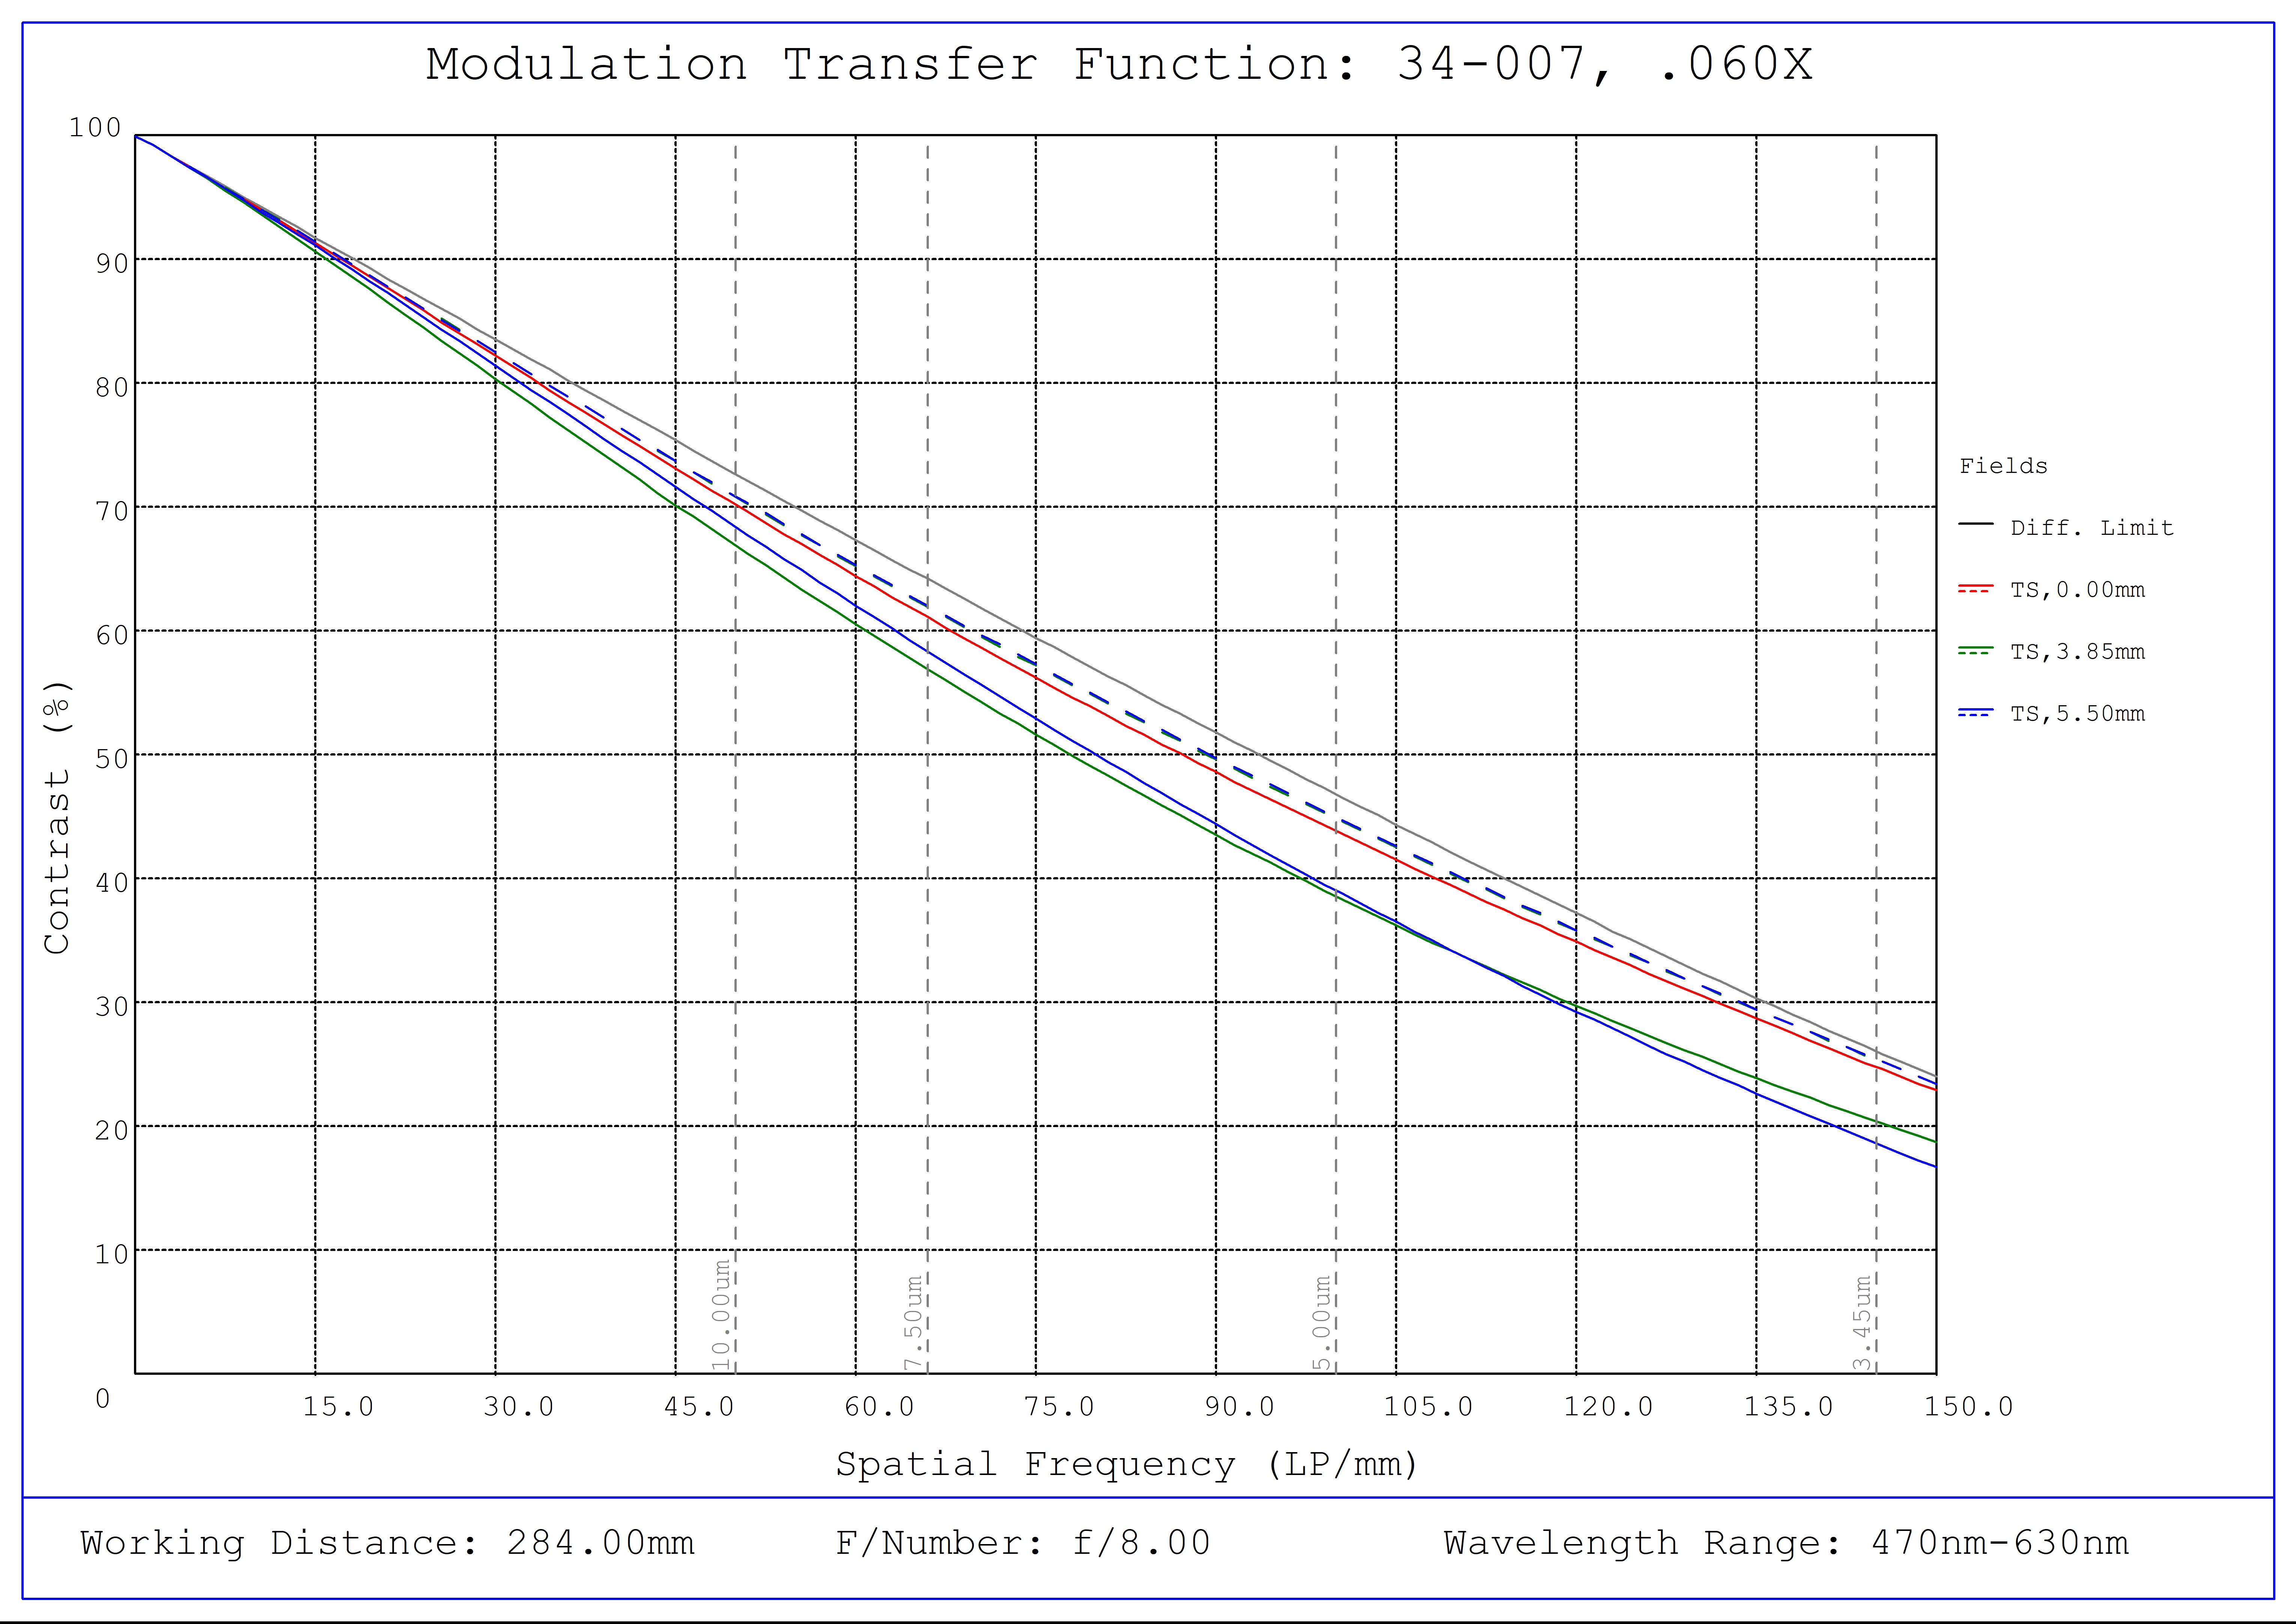 #34-007, 0.060X, 2/3" C-Mount TitanTL® Telecentric Lens, Modulated Transfer Function (MTF) Plot, 284mm Working Distance, f8